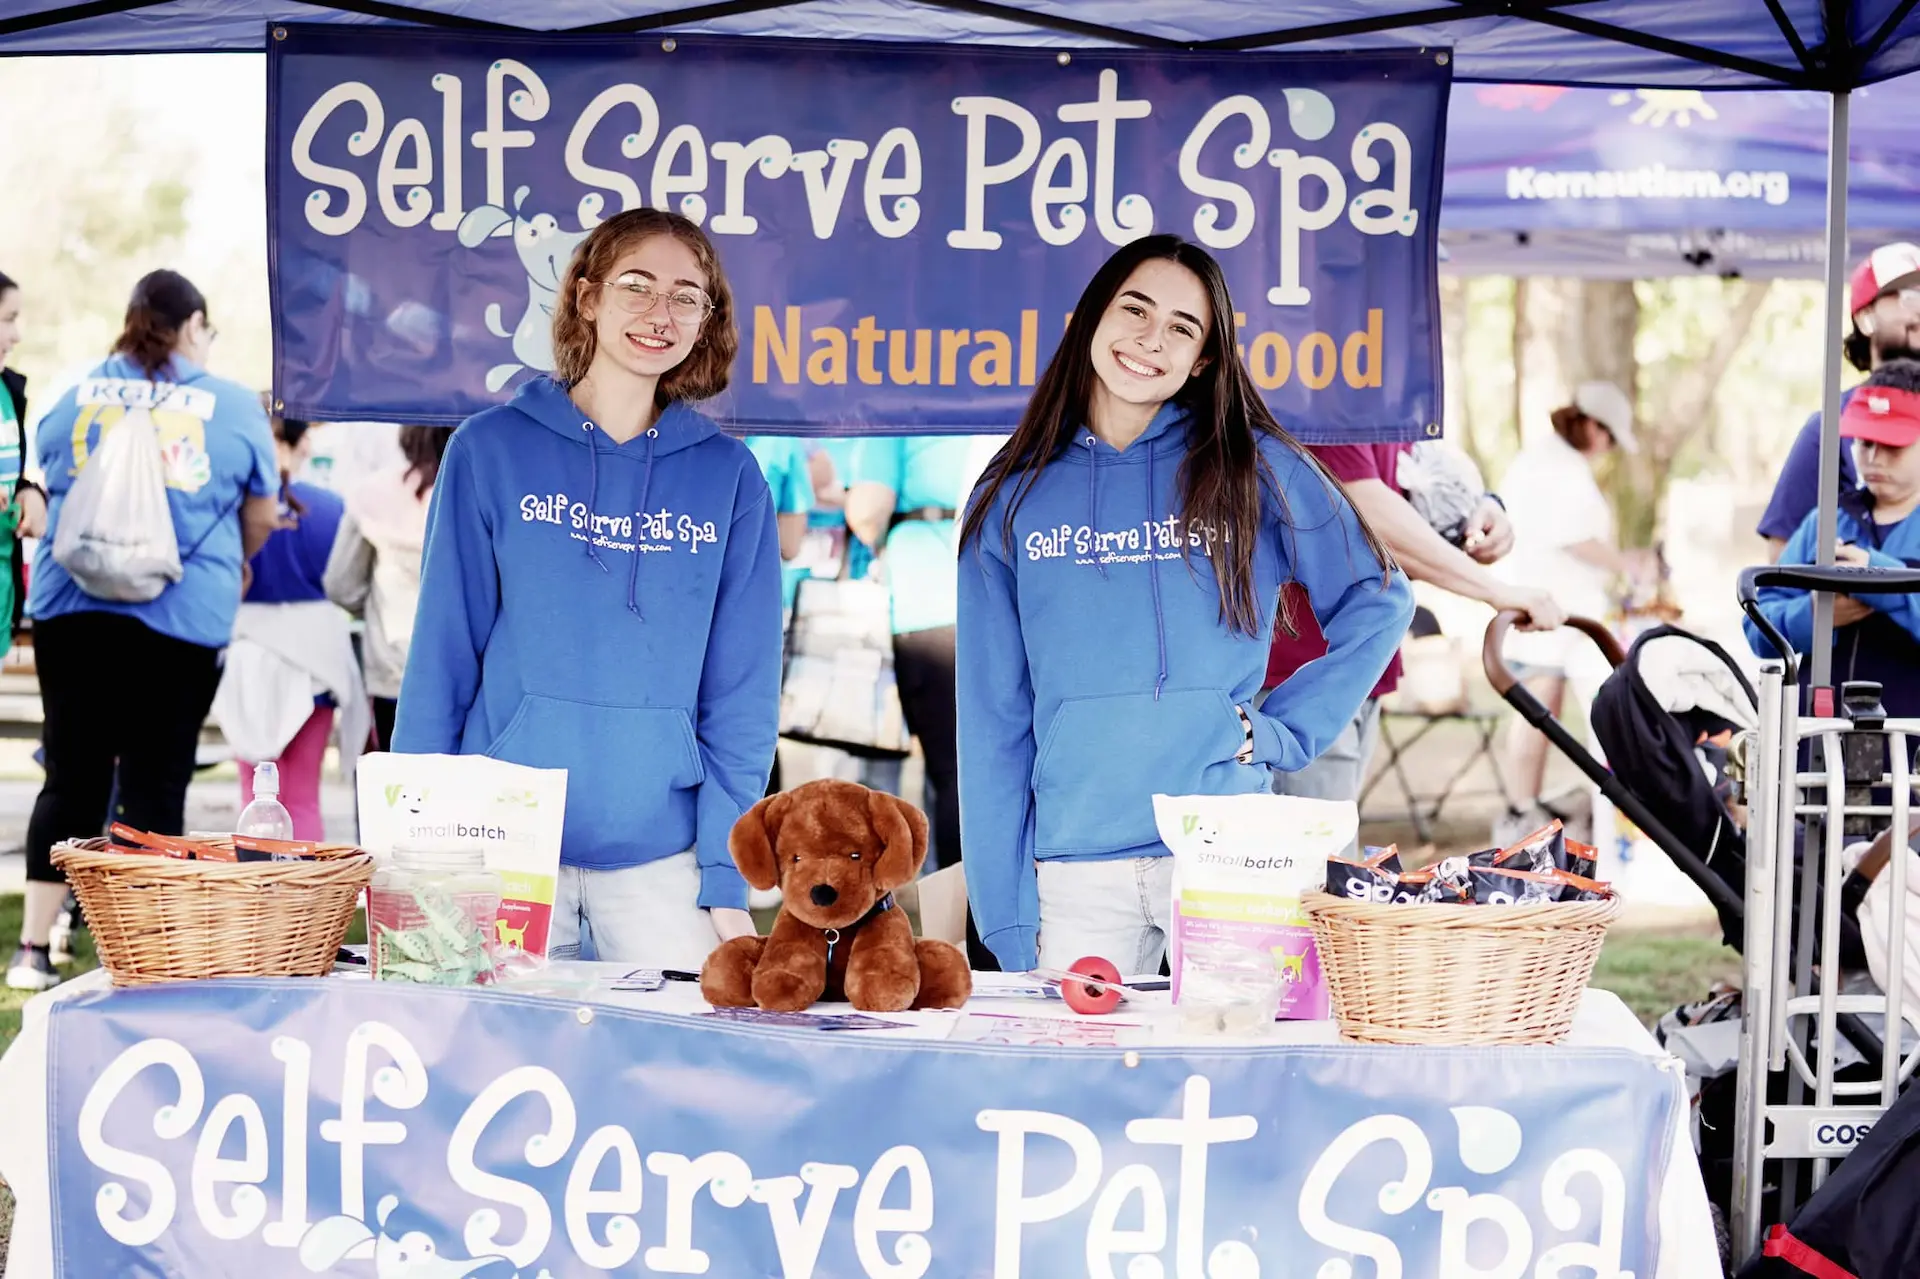 The Self Serve Pet Spa booth at the Kern Run Walk 2022